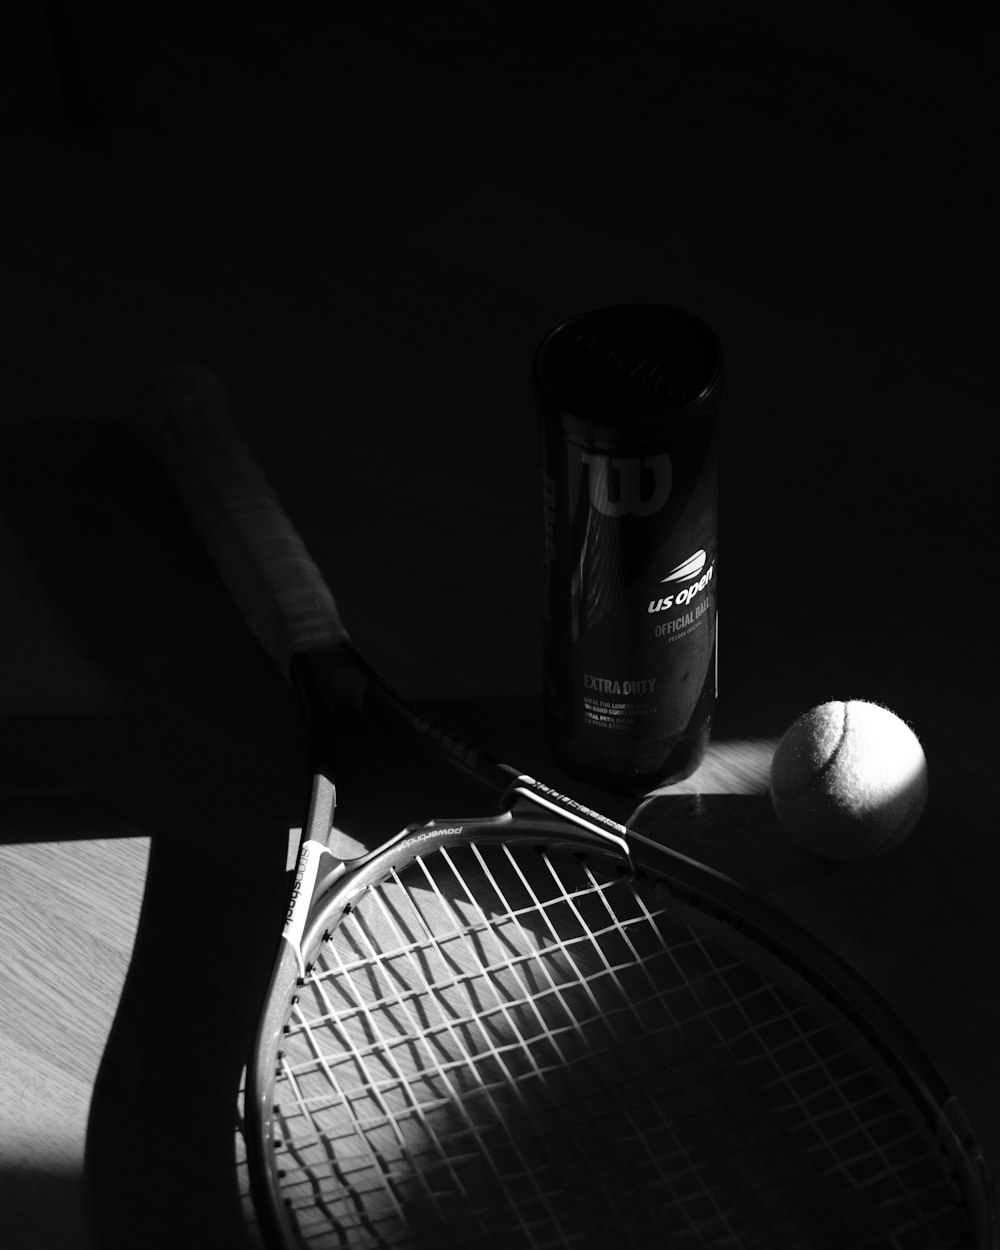 a tennis racket and a ball